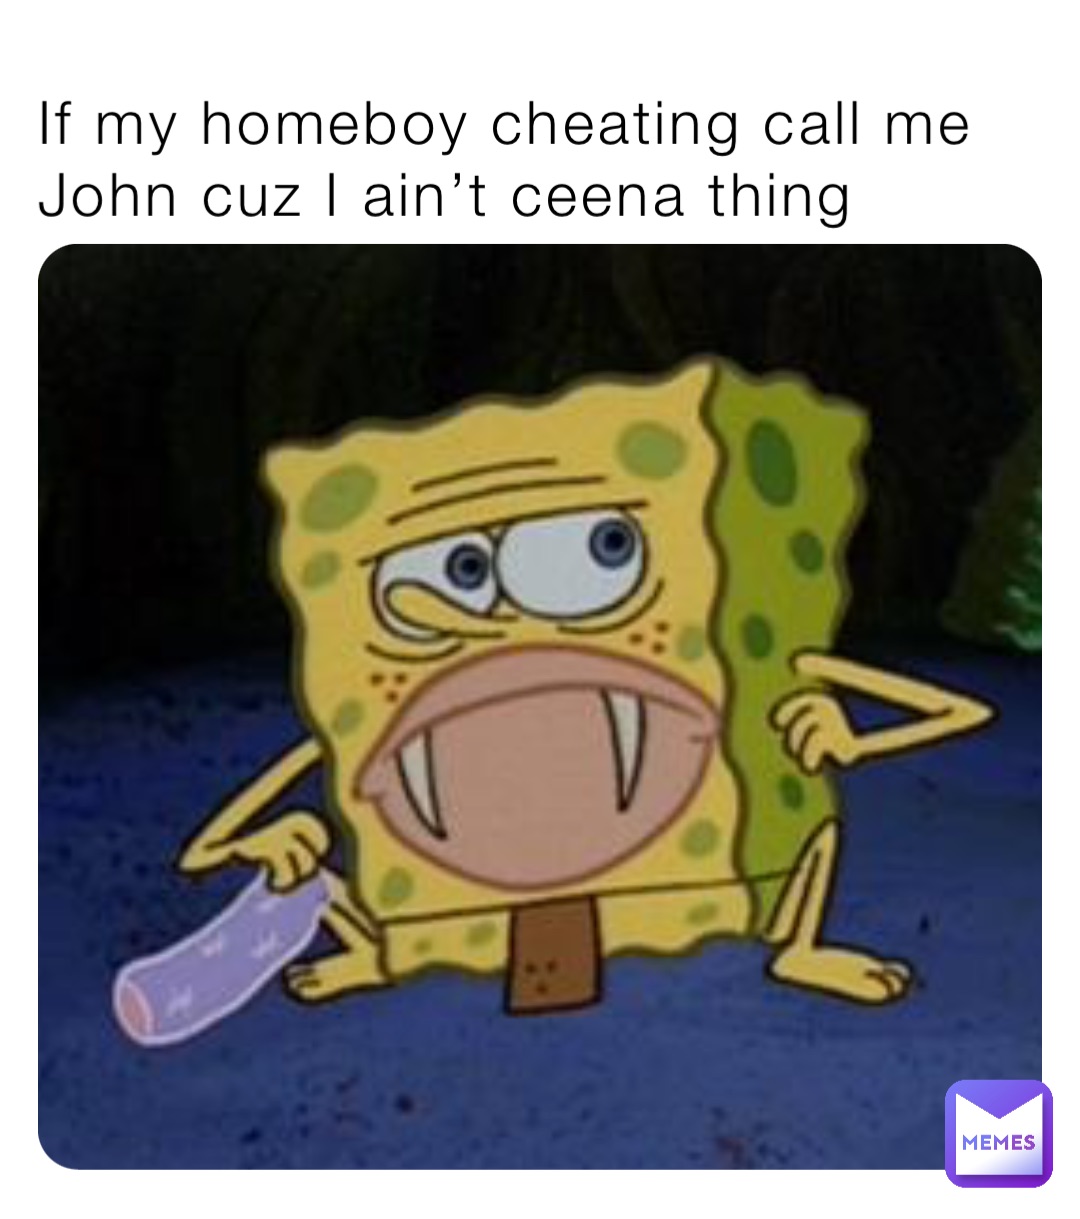 If my homeboy cheating call me John cuz I ain’t ceena thing